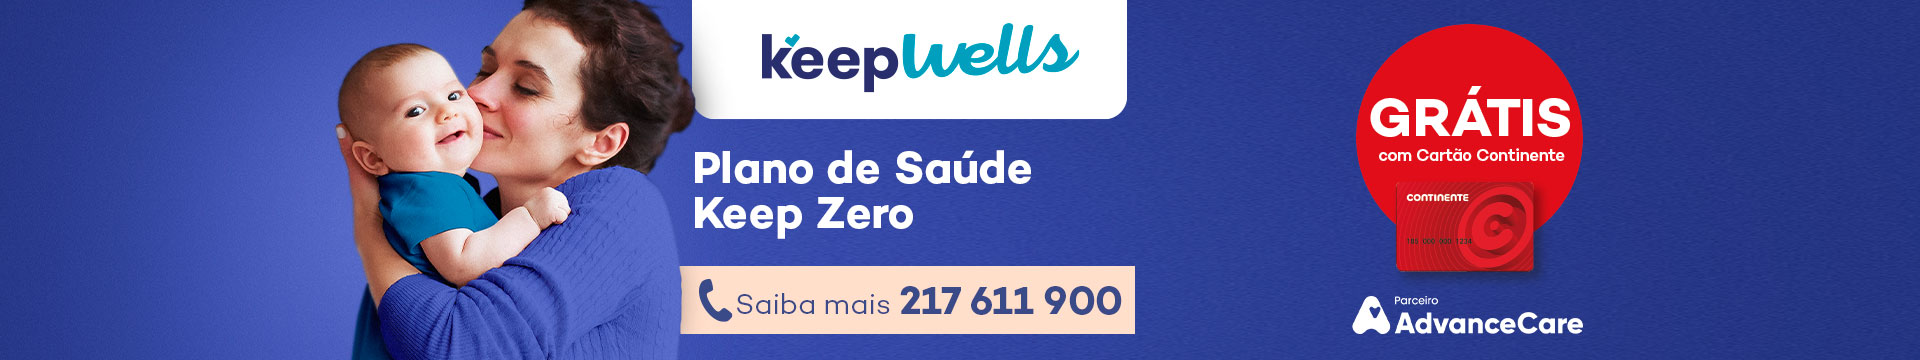 KeepWells- Plano de Saúde